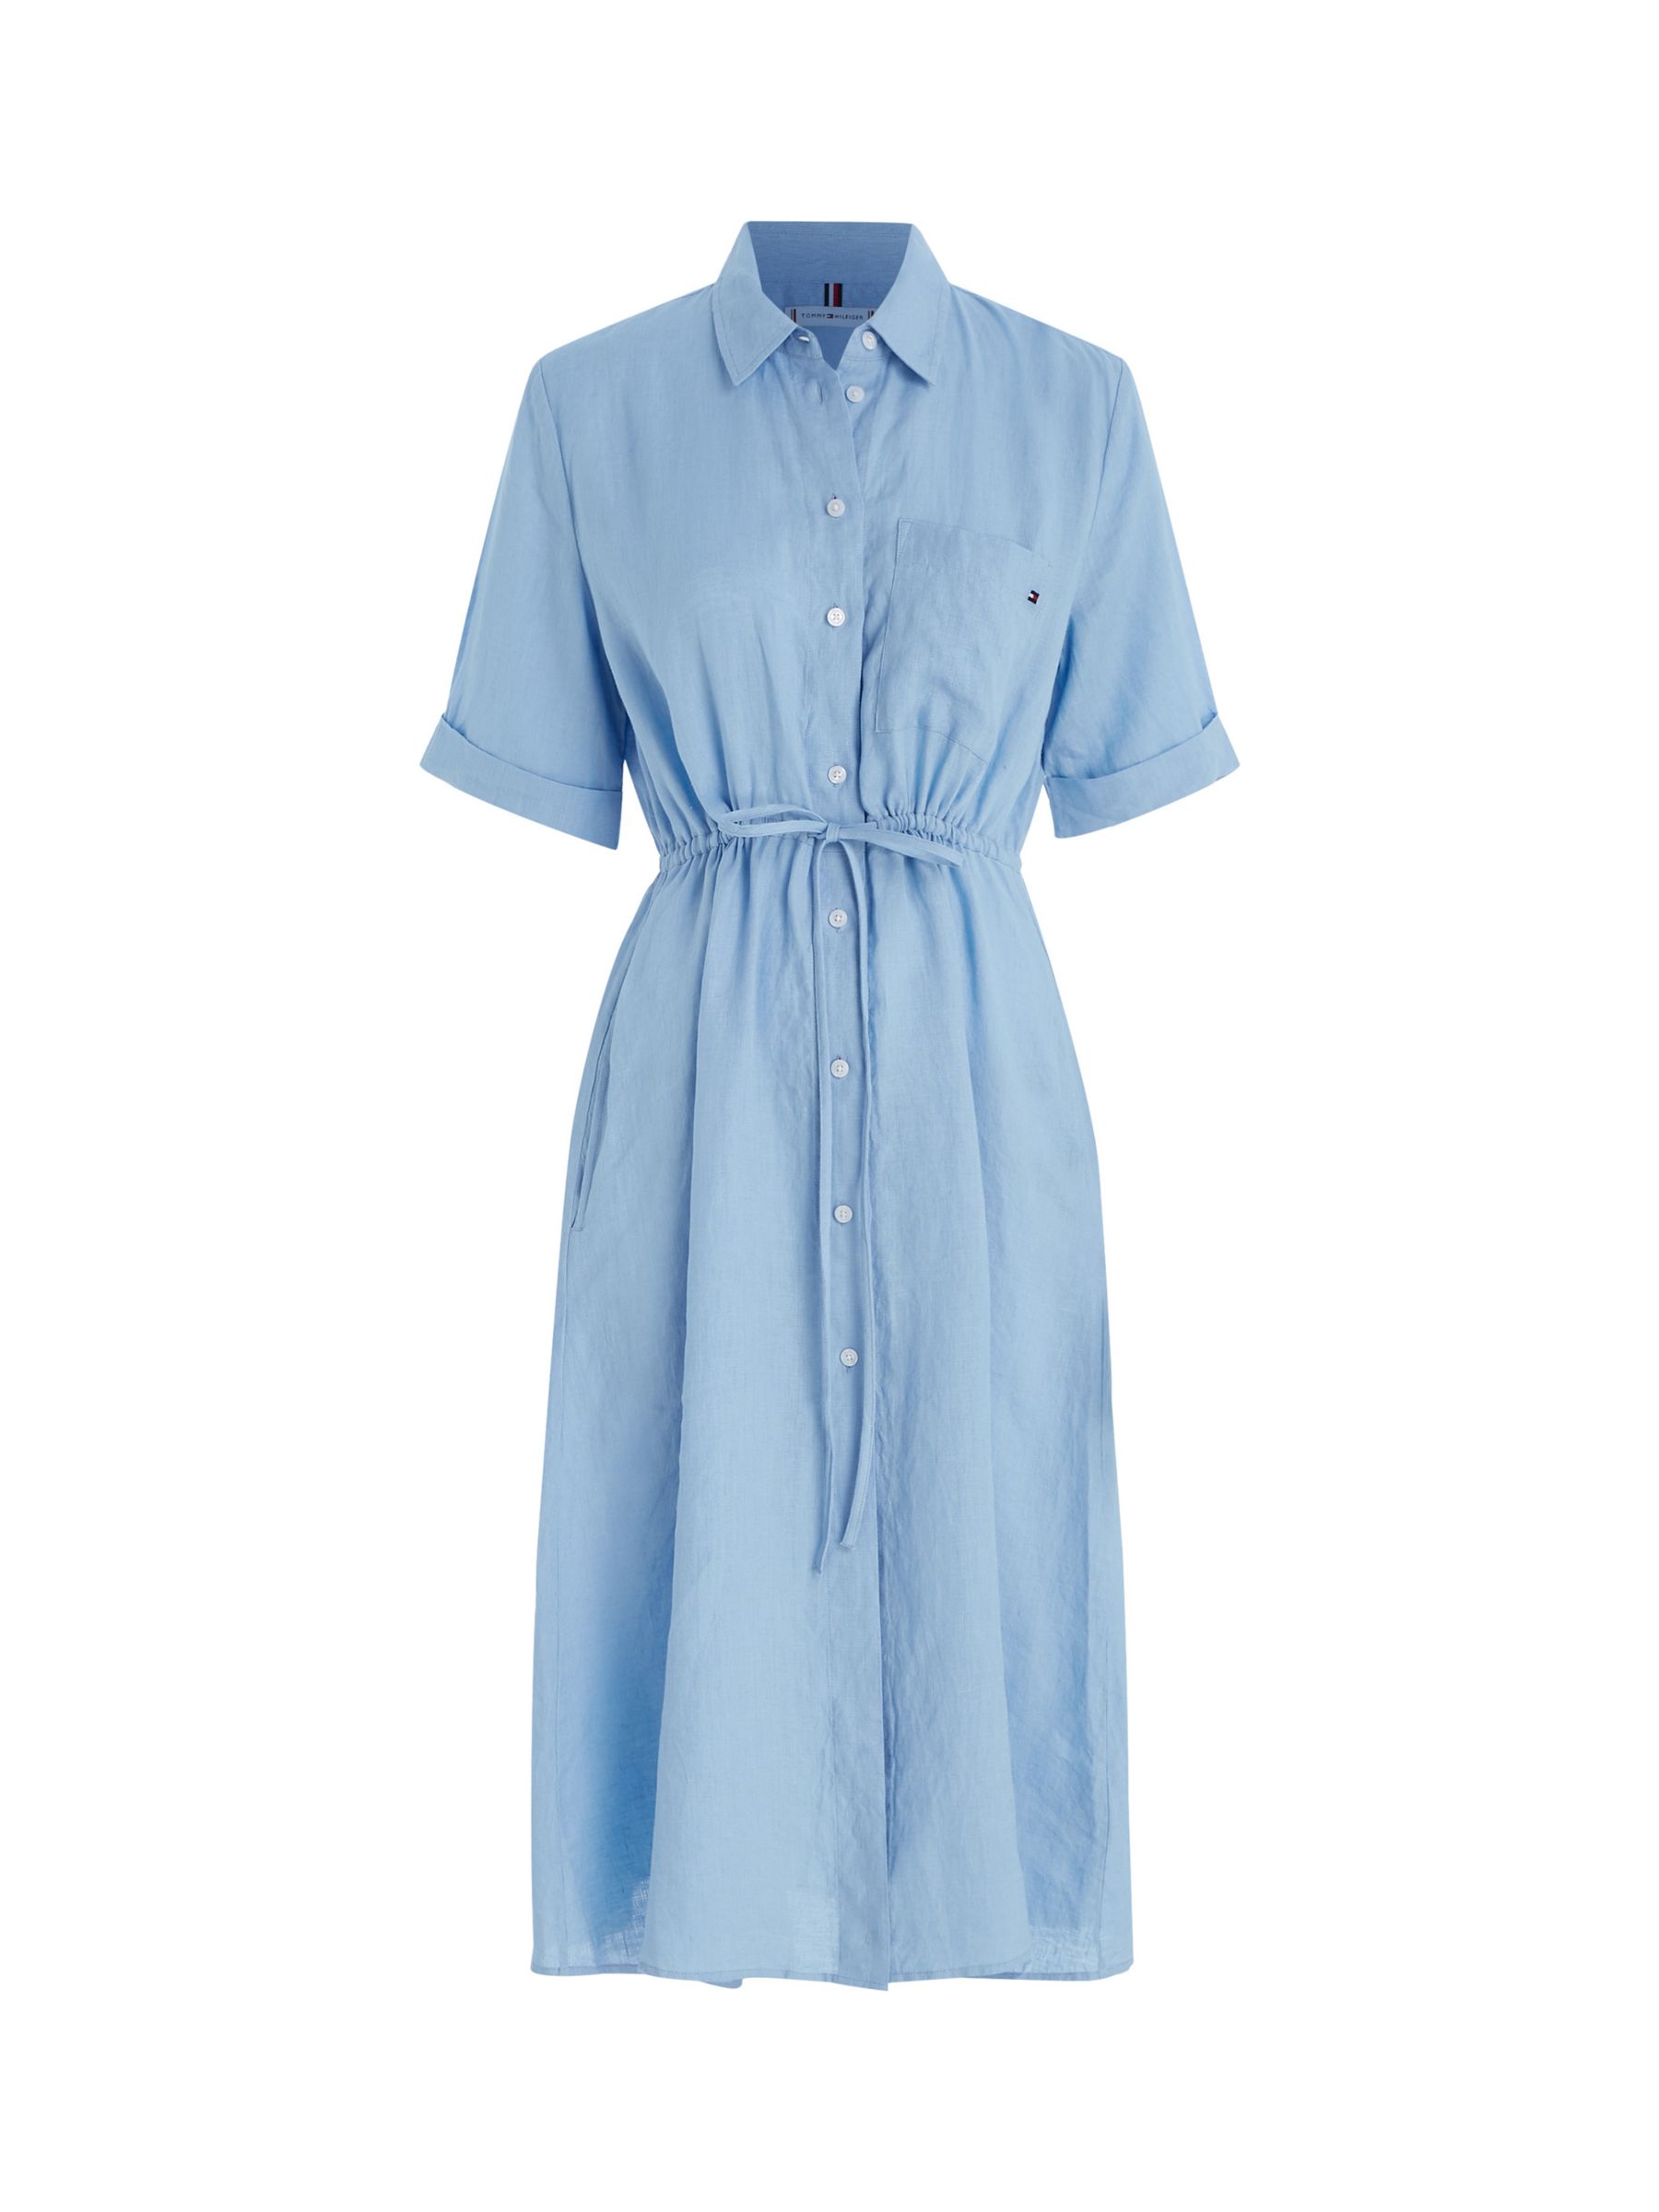 Tommy Hilfiger Shirt Elbow Length Sleeve Linen Dress, Vessel Blue, 4